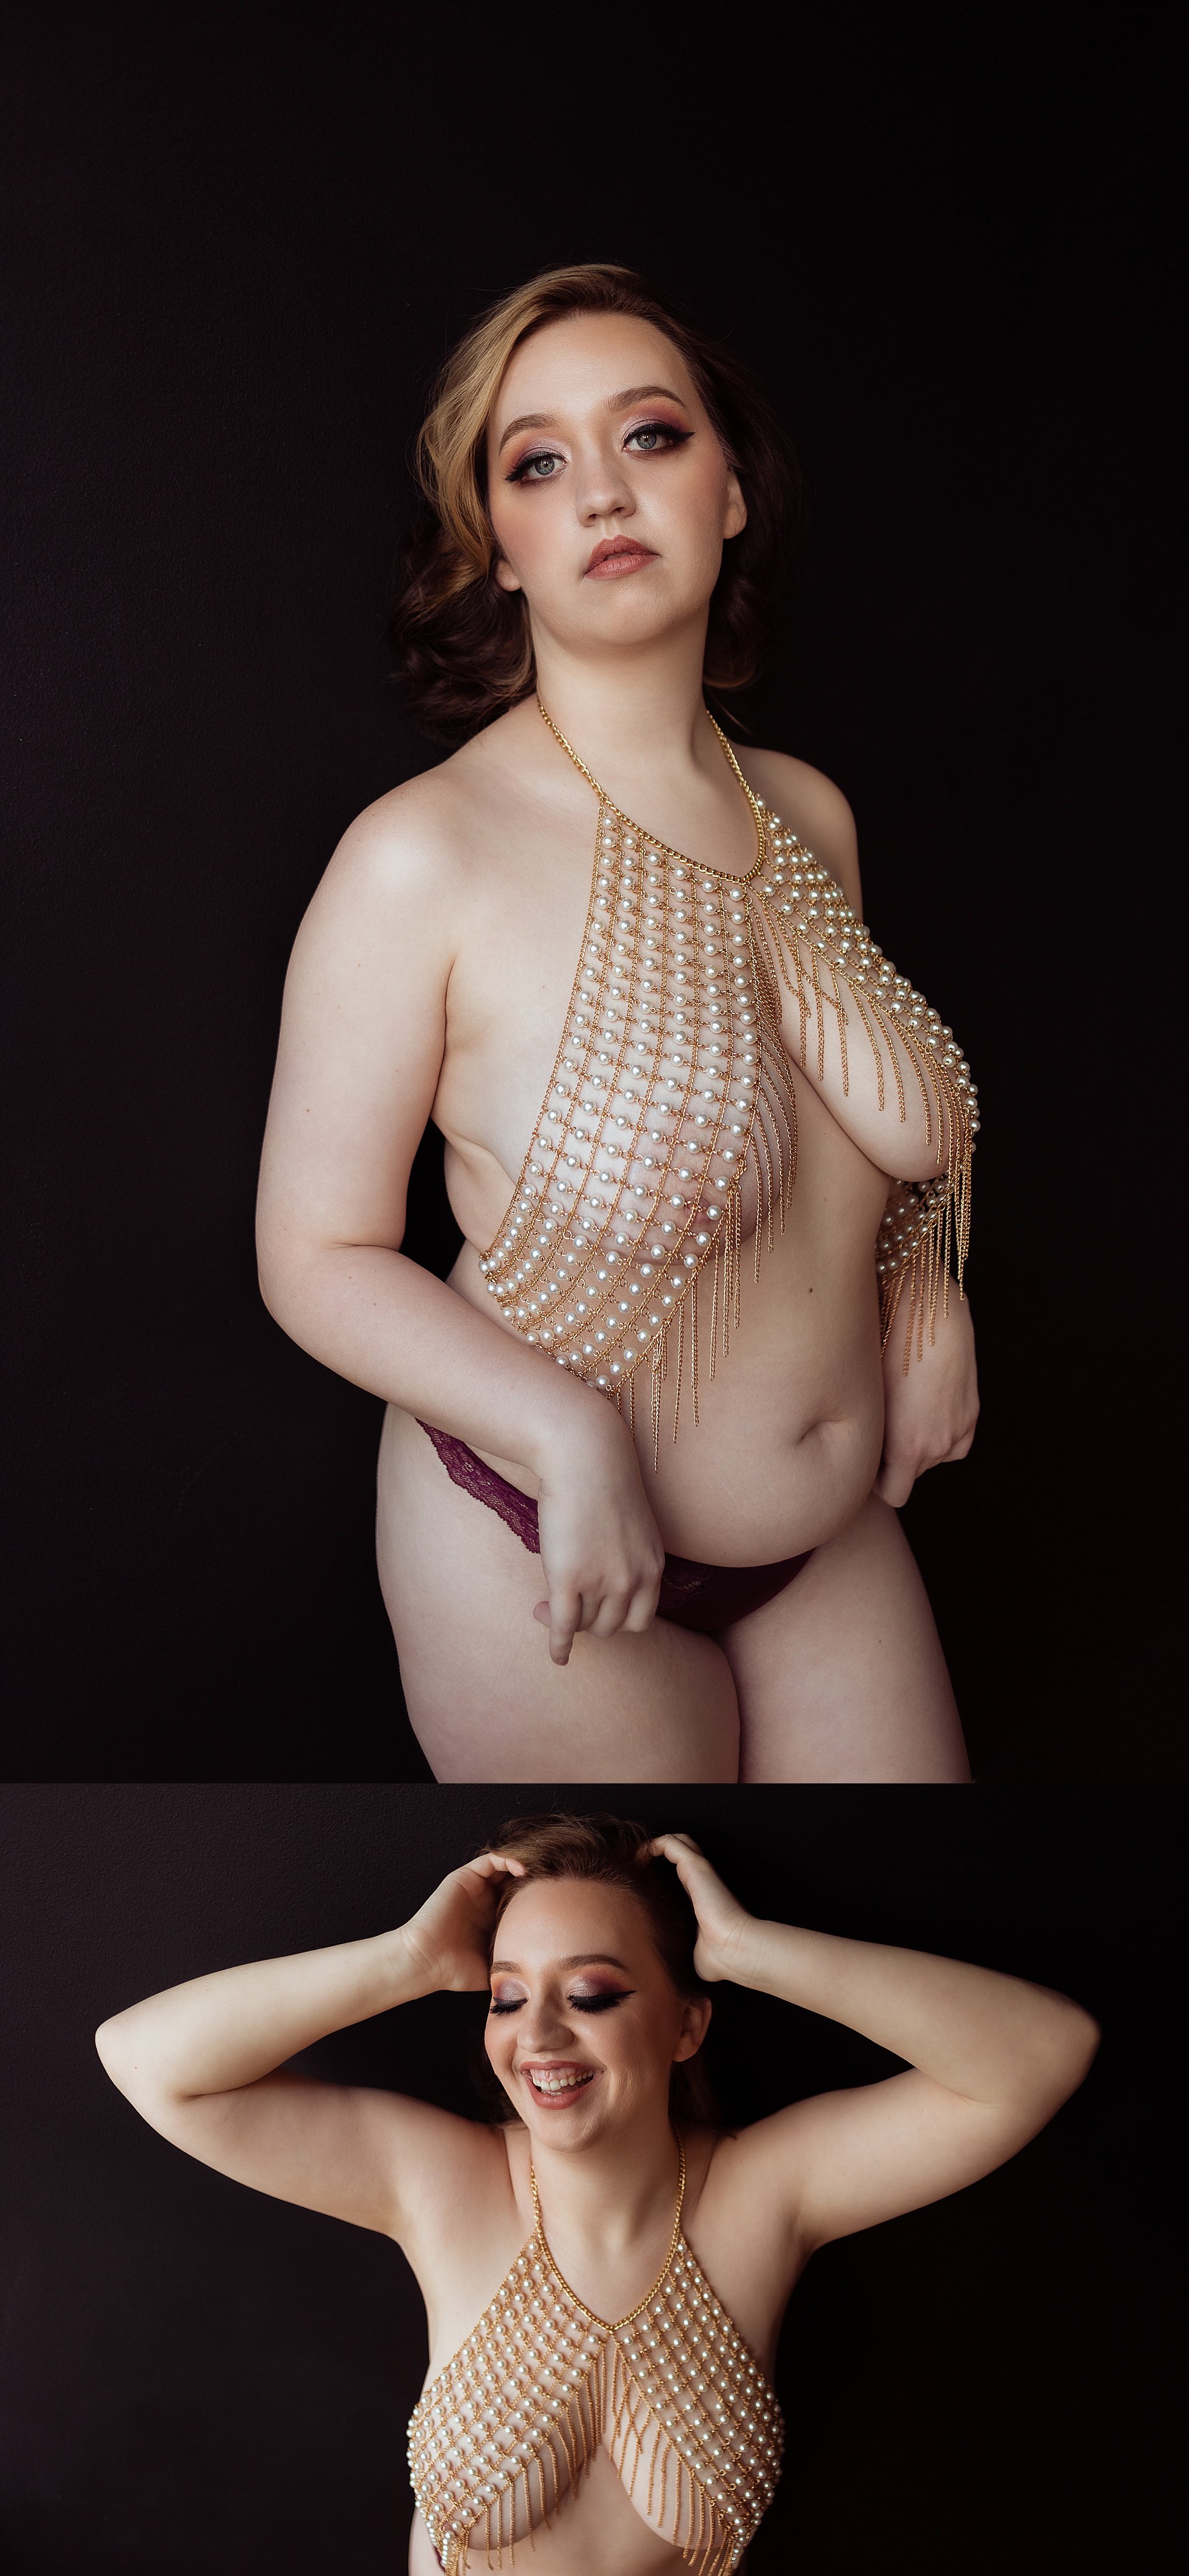 burlesque-inspired-boudoir-photos-20.jpg